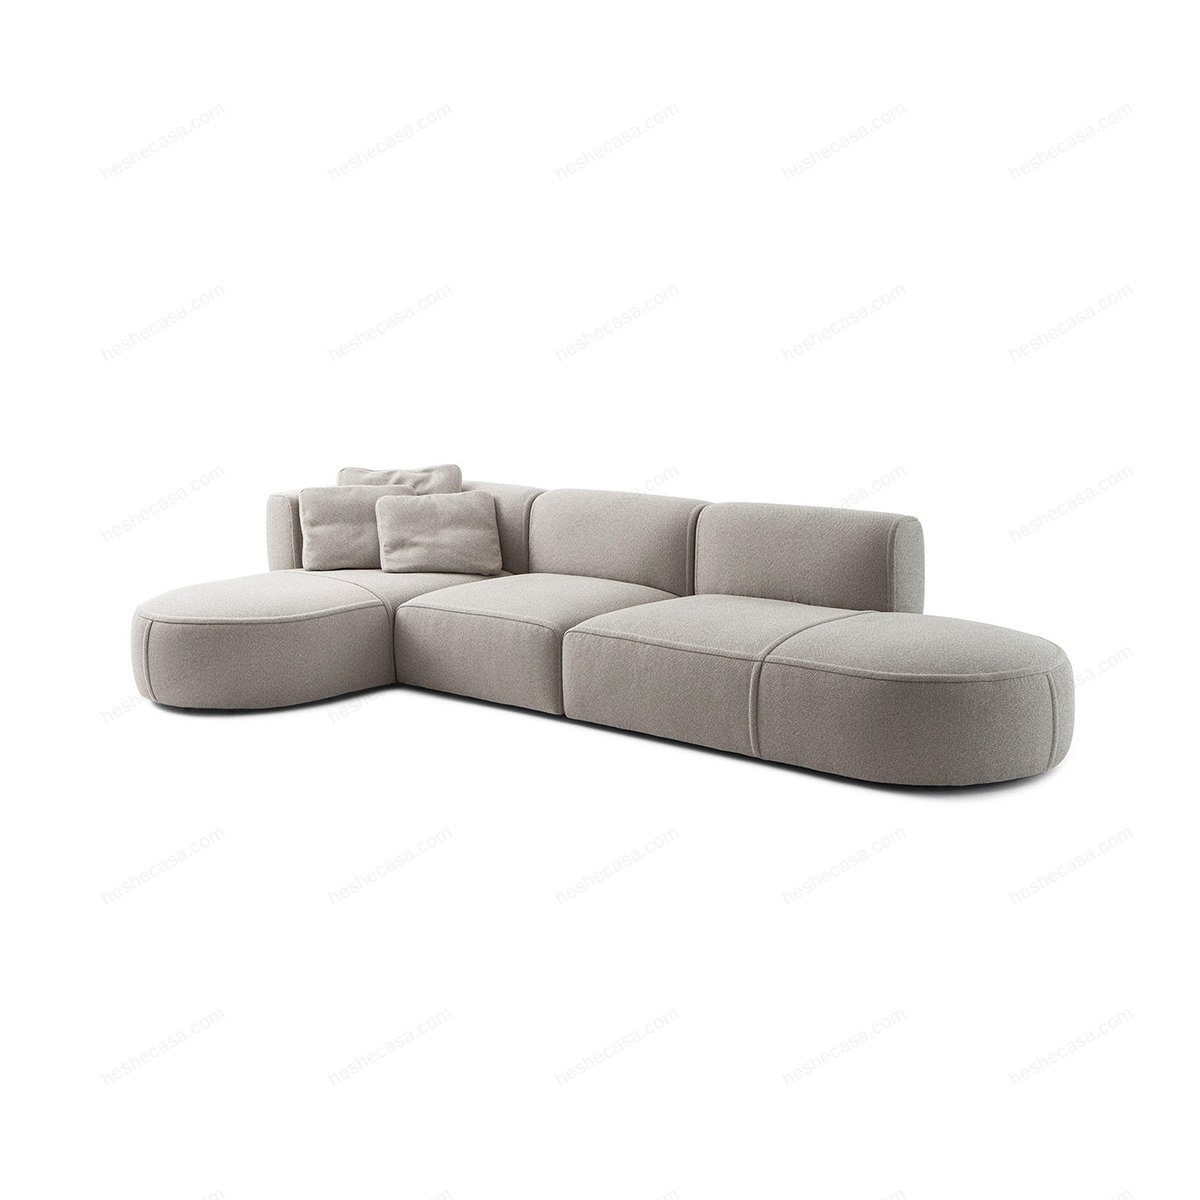 553-bowy-sofa沙发